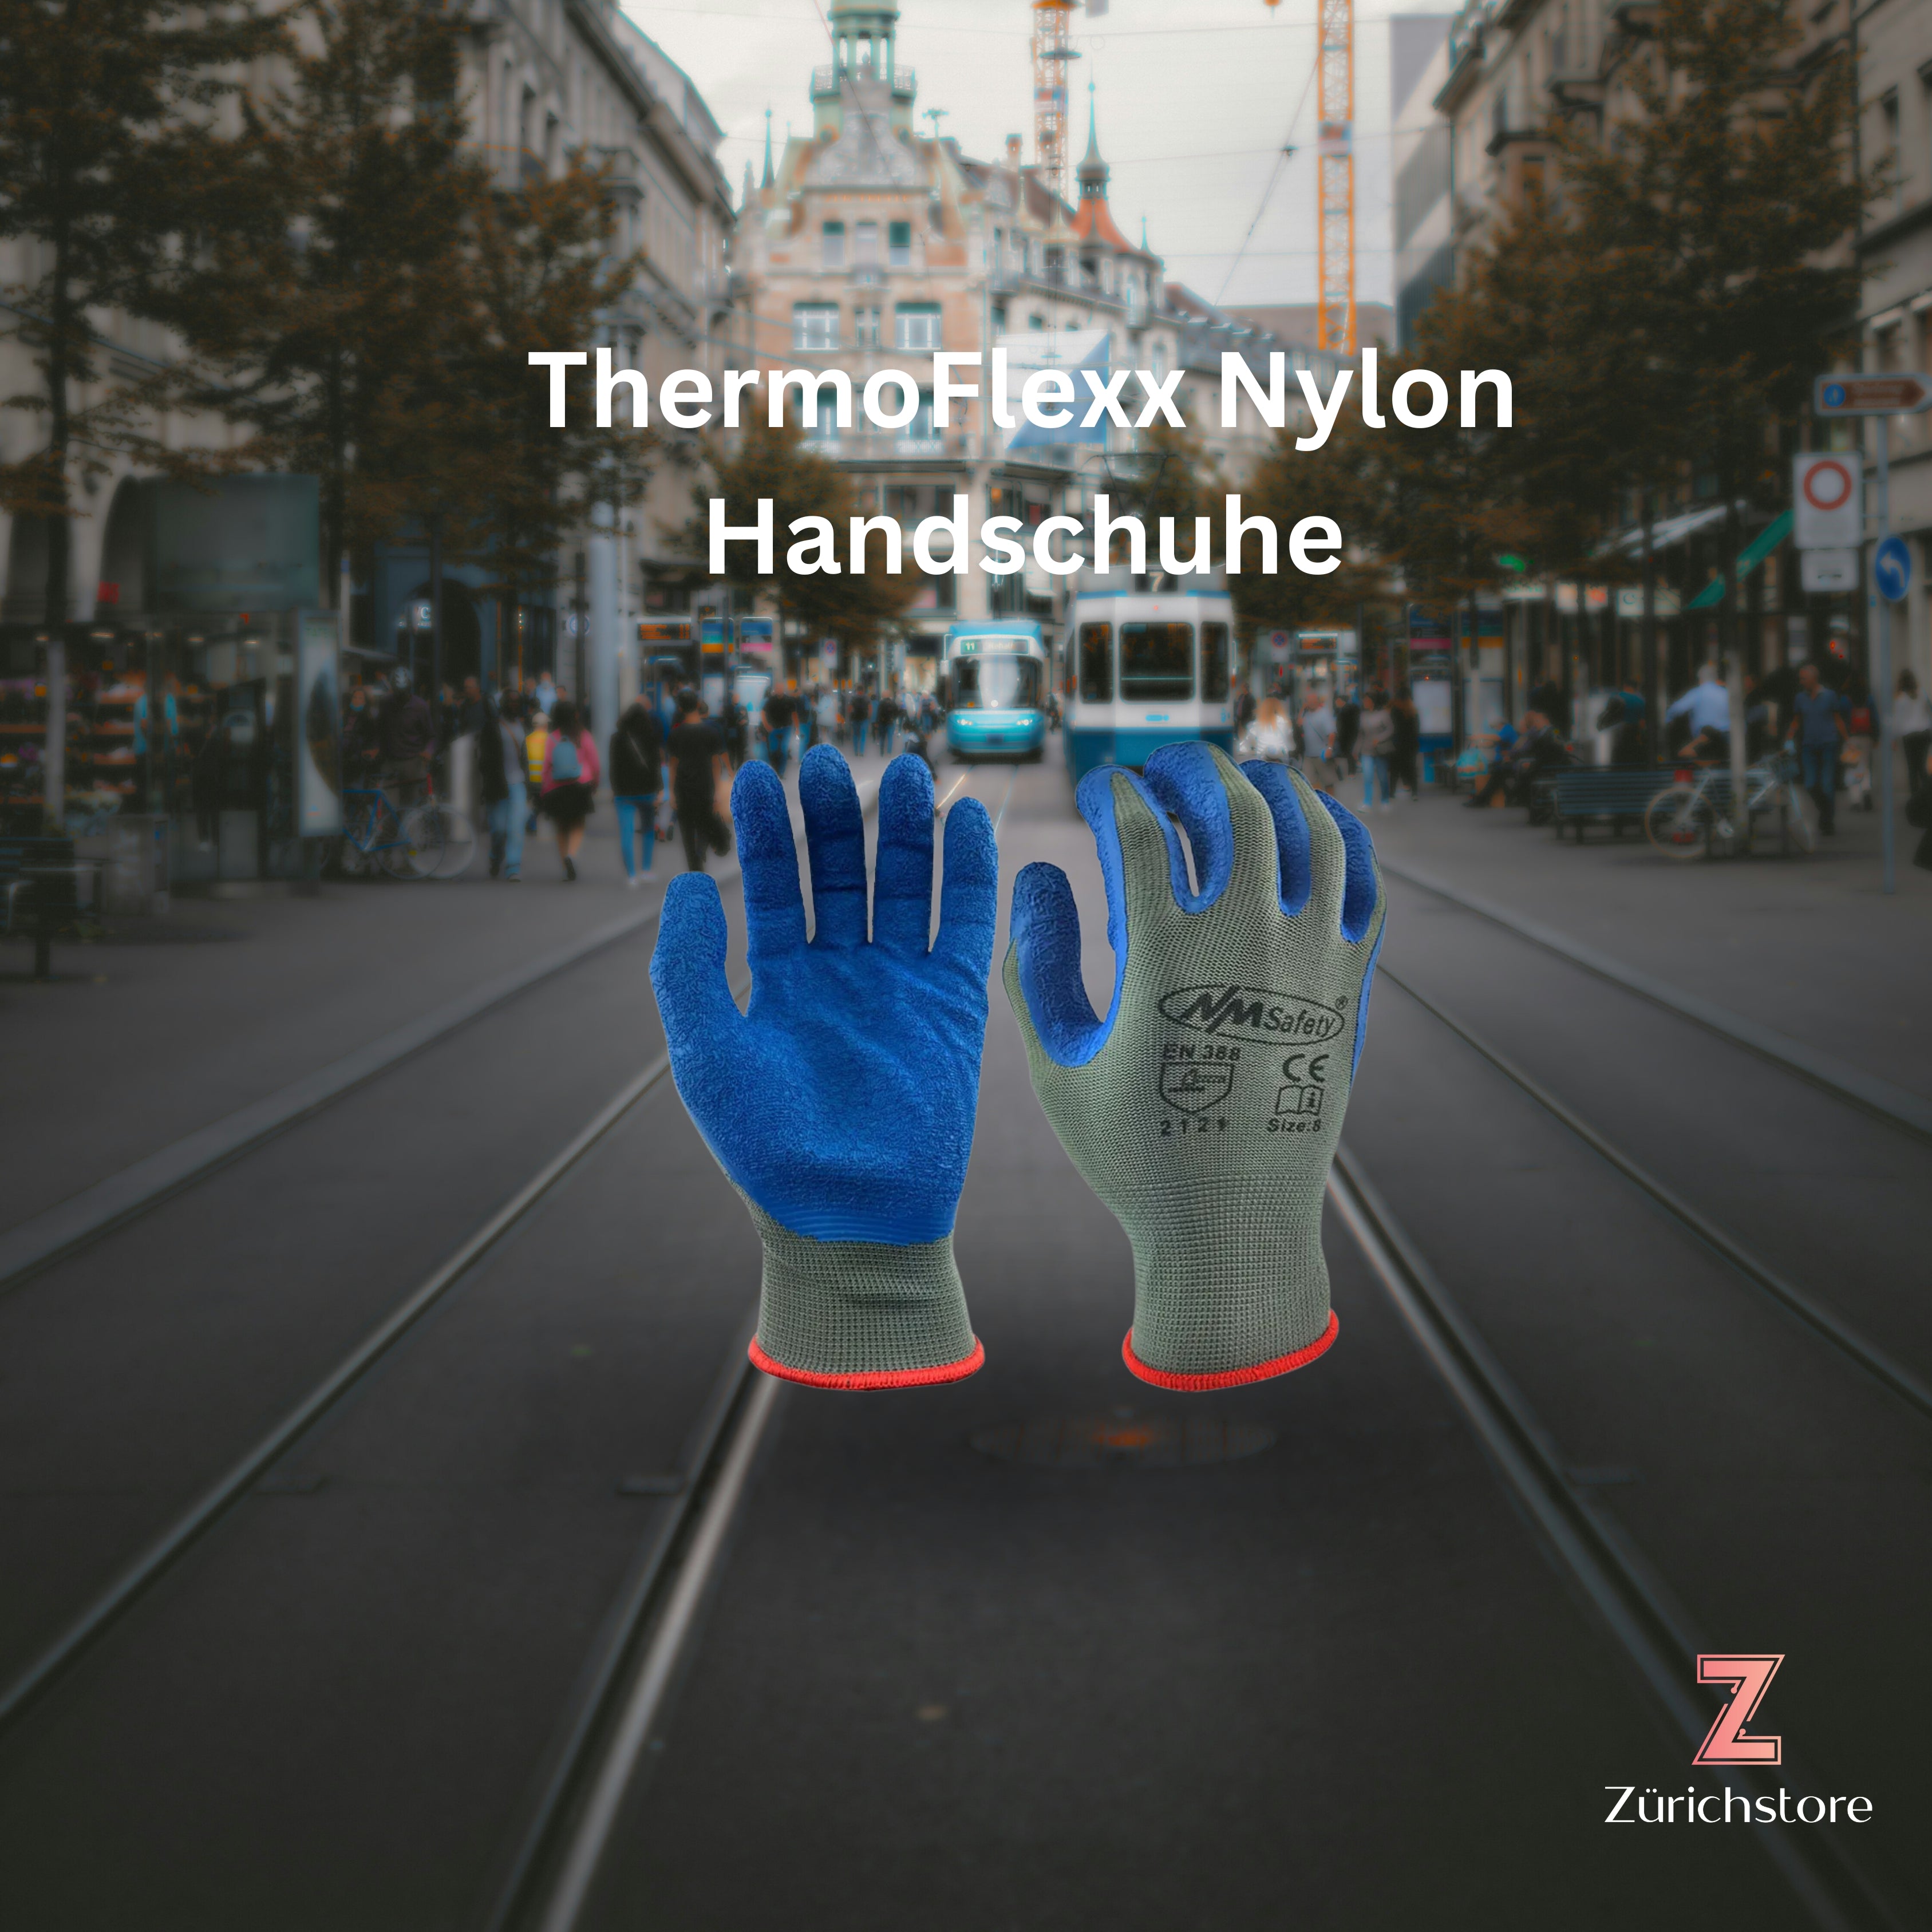 ThermoFlexx Nylon Handschuhe